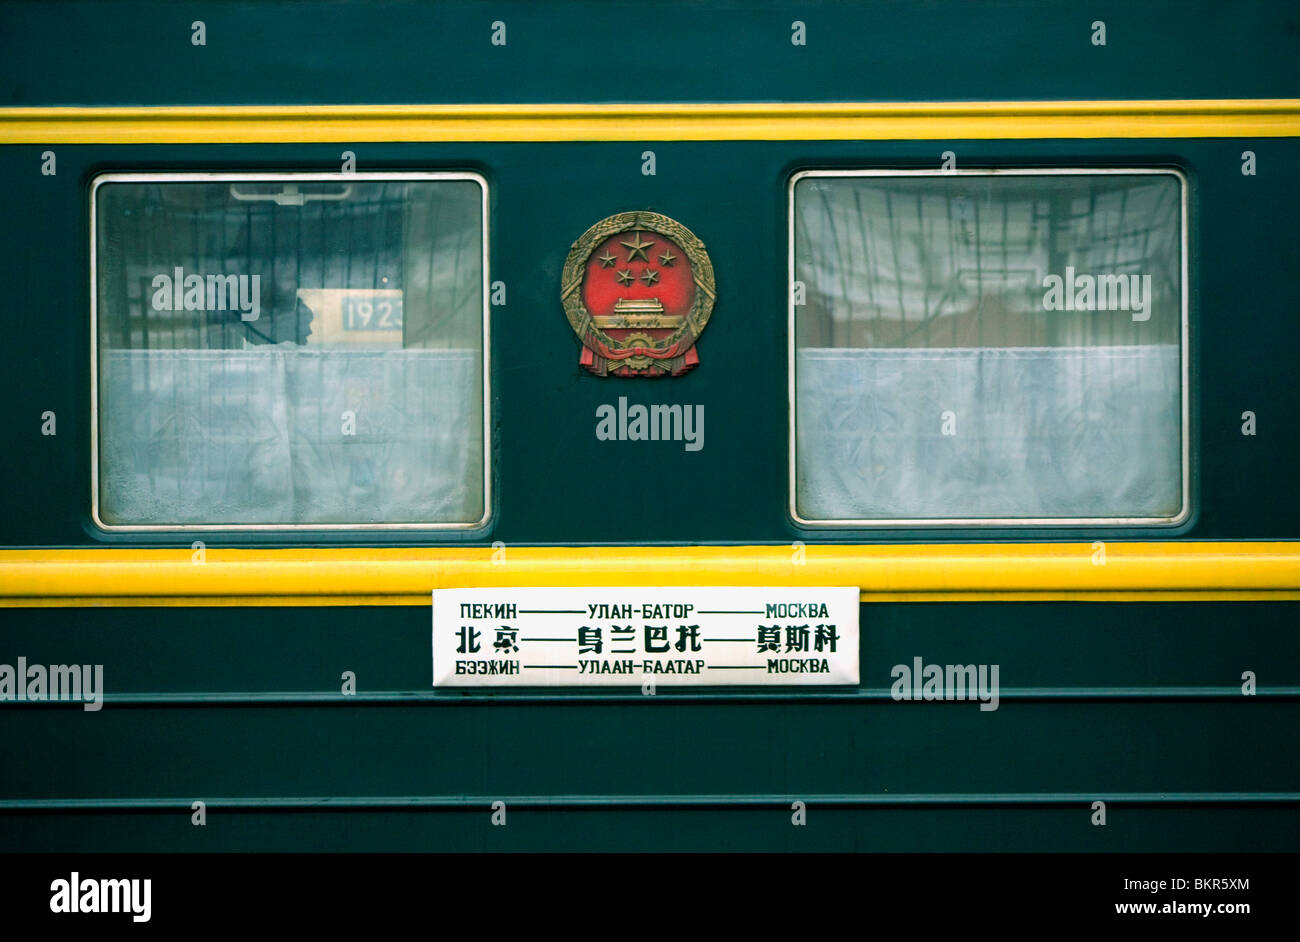 La Russia, Siberia, Trans-Siberian; treno rotta lettura, Pekin - - Ulan Bator - Moskva; Foto Stock